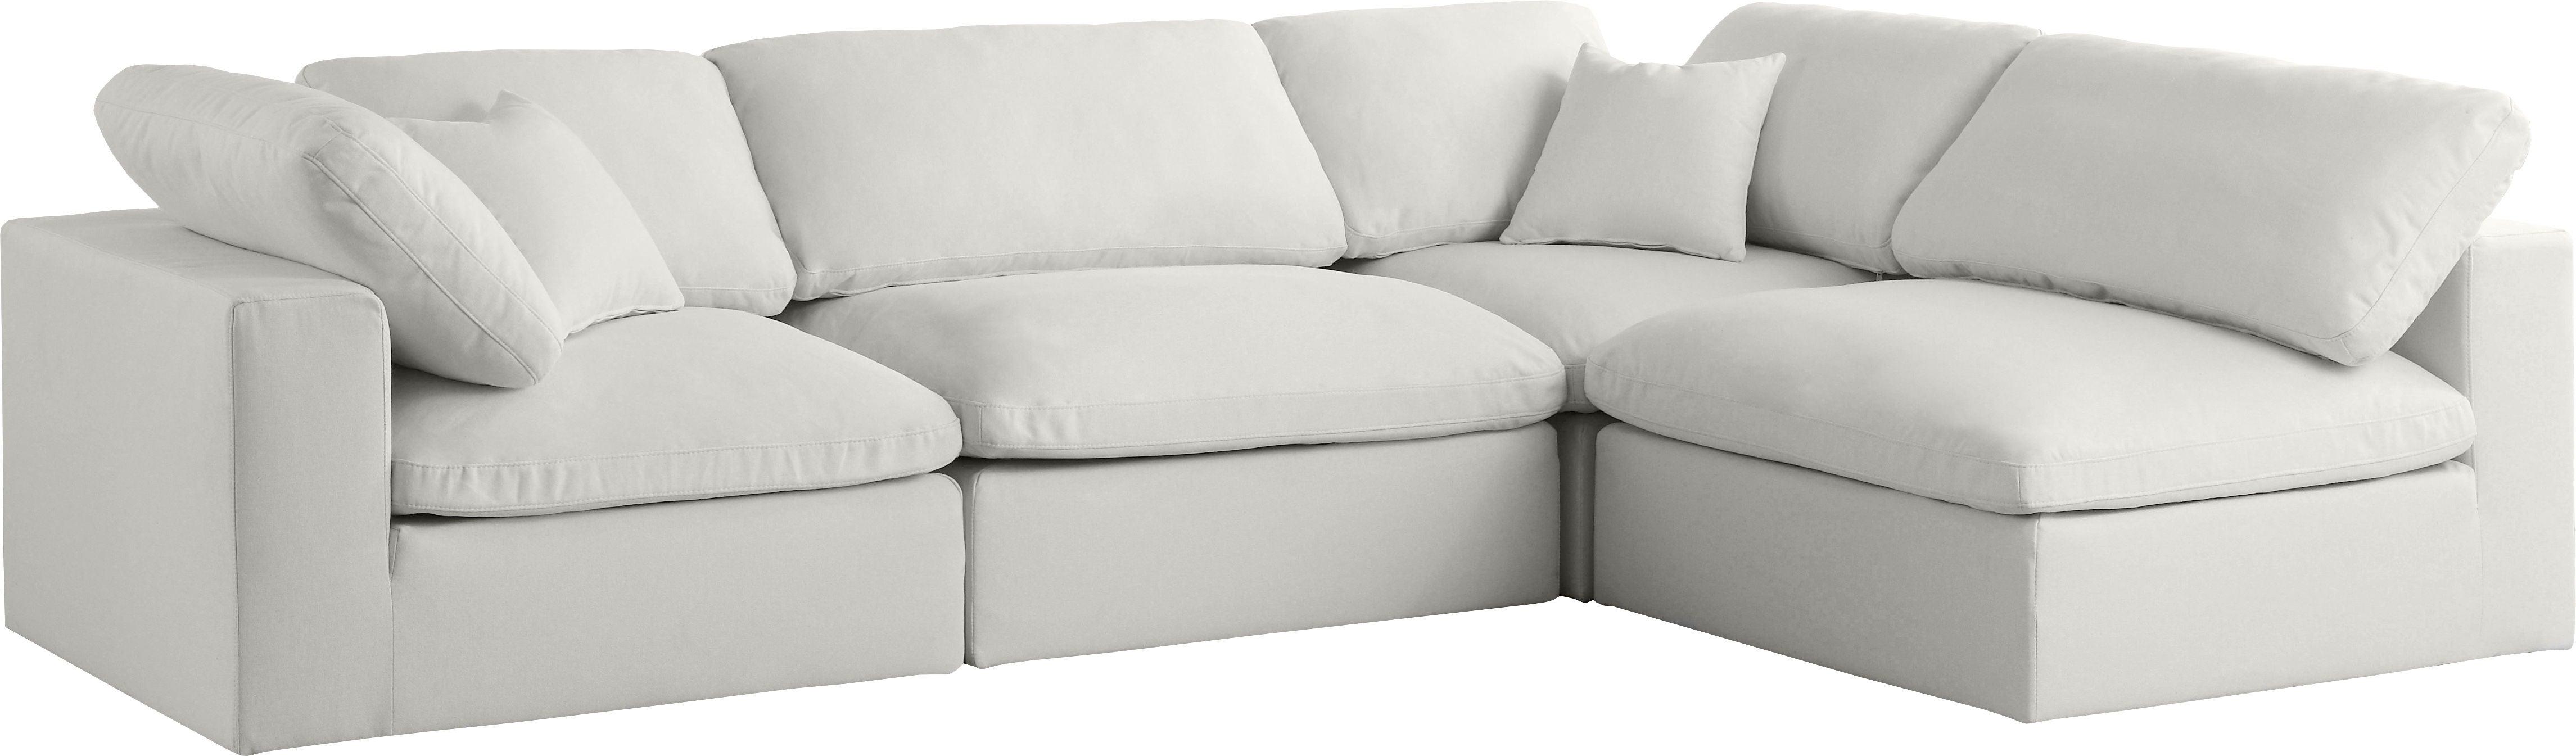 Meridian Furniture - Plush - Velvet Standart Comfort Modular Sectional 4 Piece - Cream - 5th Avenue Furniture